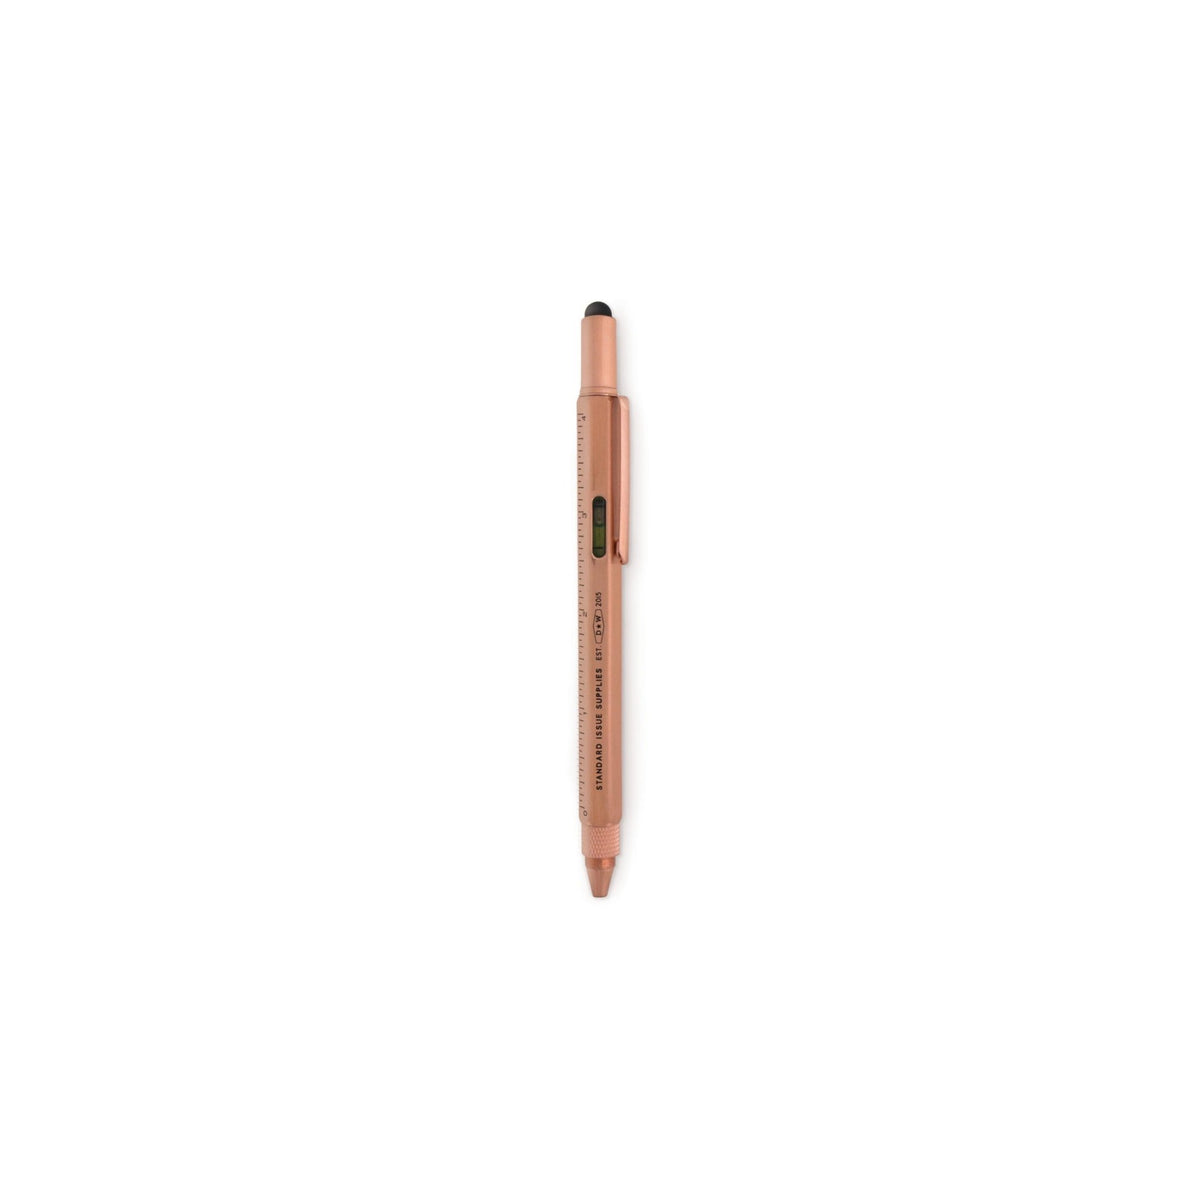 Design WorksMetallic Multi Tool PEN – Copper #same day gift delivery melbourne#